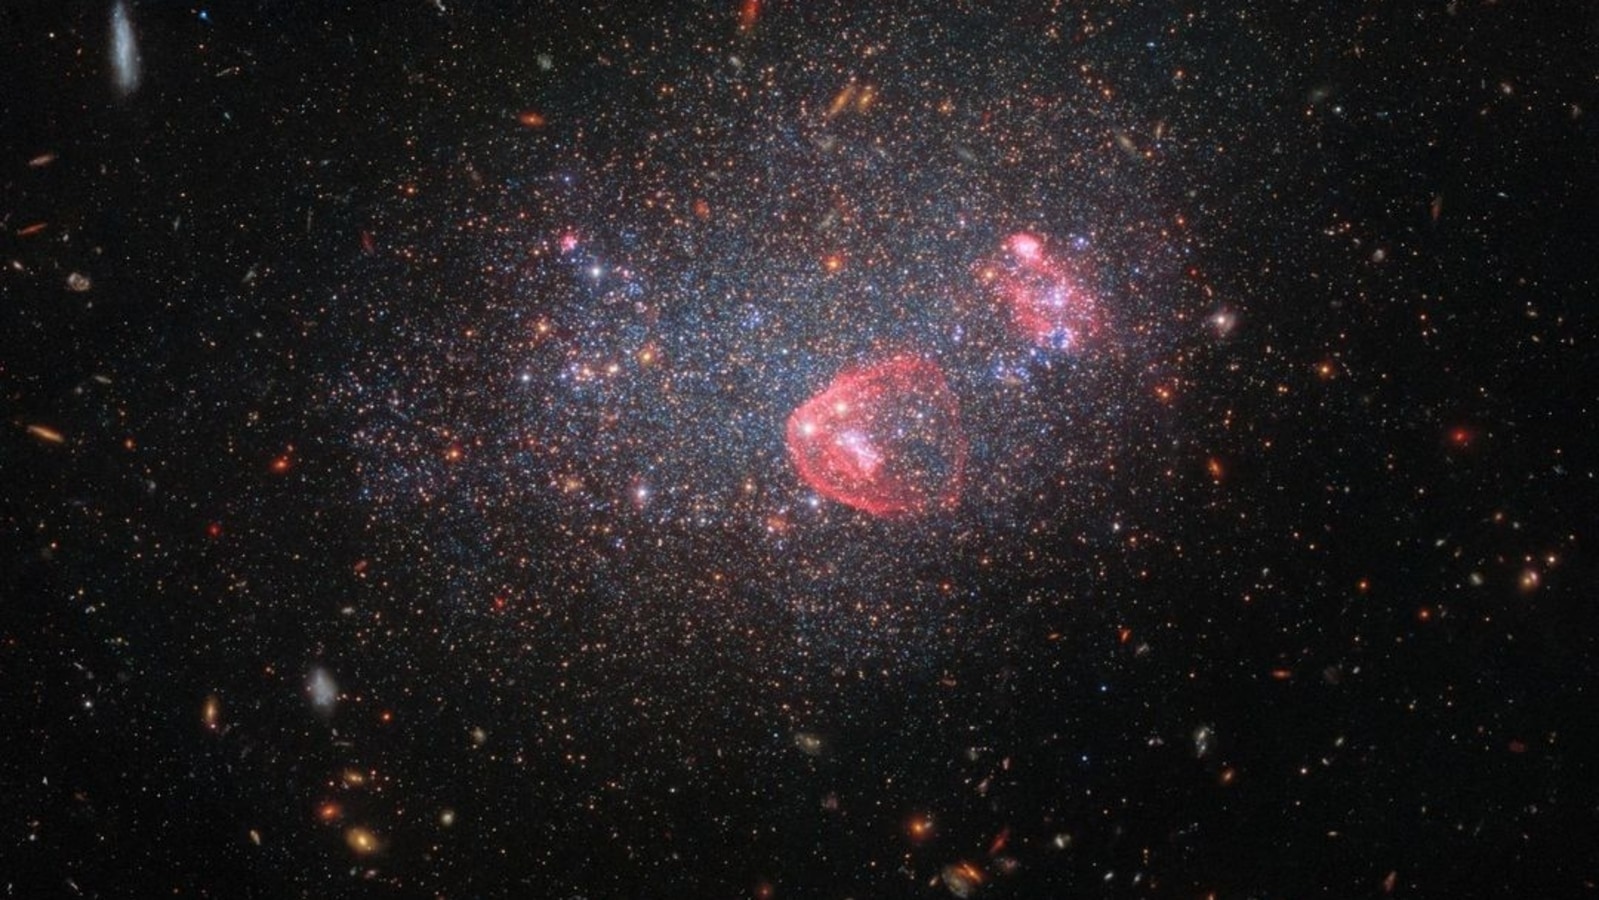 online-awe-nasa-shares-amazing-snap-of-irregular-dwarf-galaxy-by-hubble-space-telescope-acs